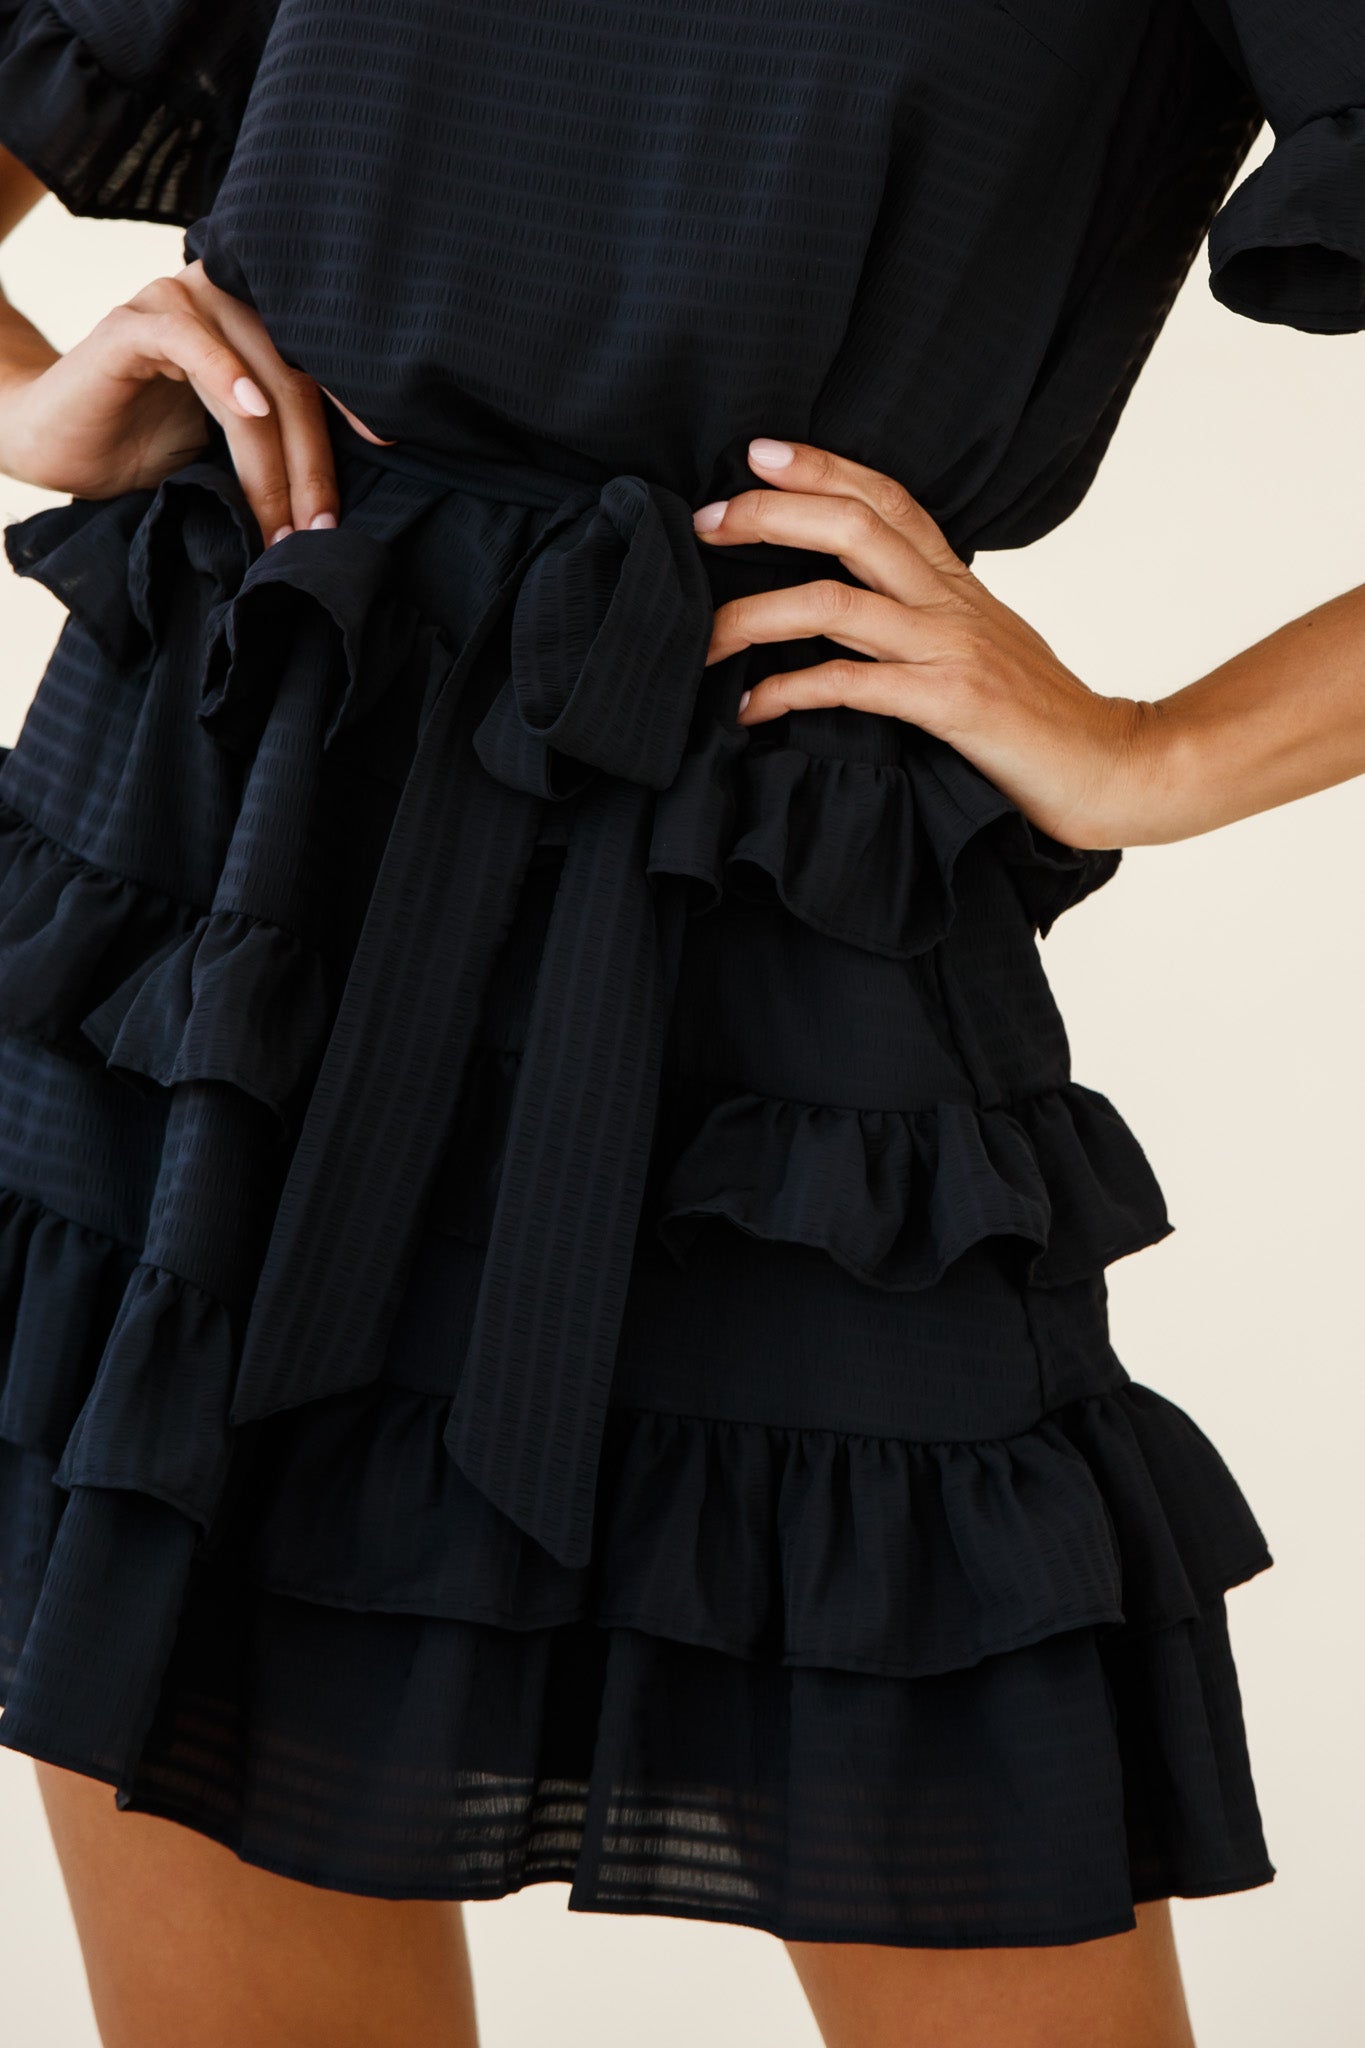 Ruffle Sleeve the Layered Black Dress Selfie Short Shop Leslie | Zipporah